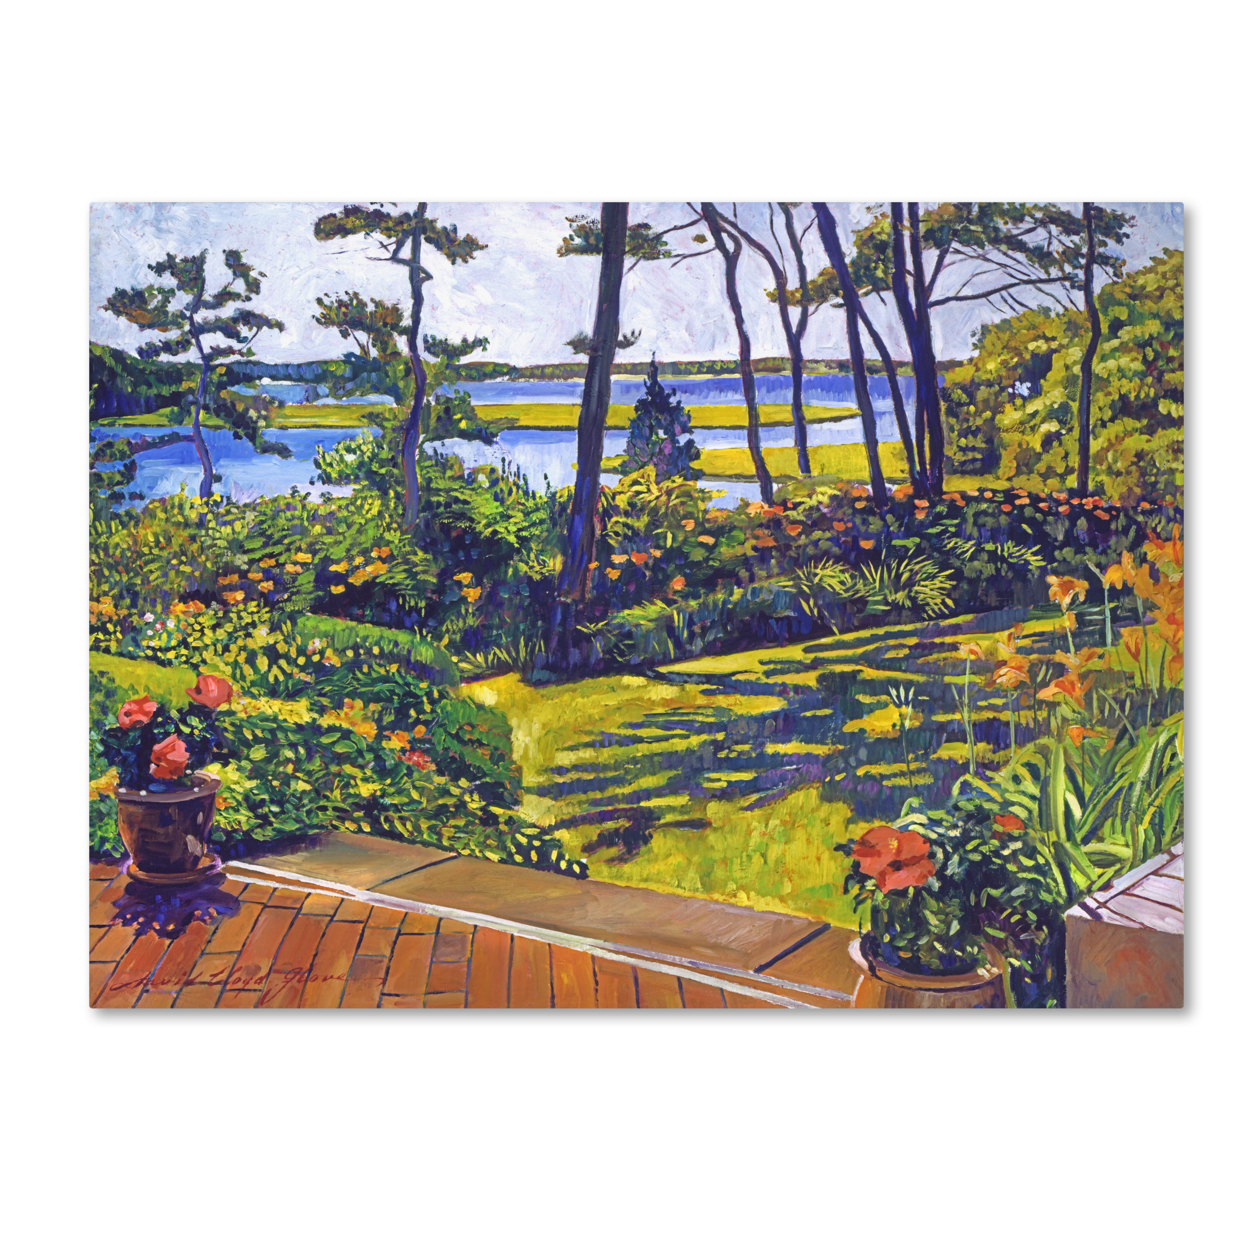 David Lloyd Glover 'Ocean Lagoon Garden' Canvas Wall Art 35 X 47 Inches